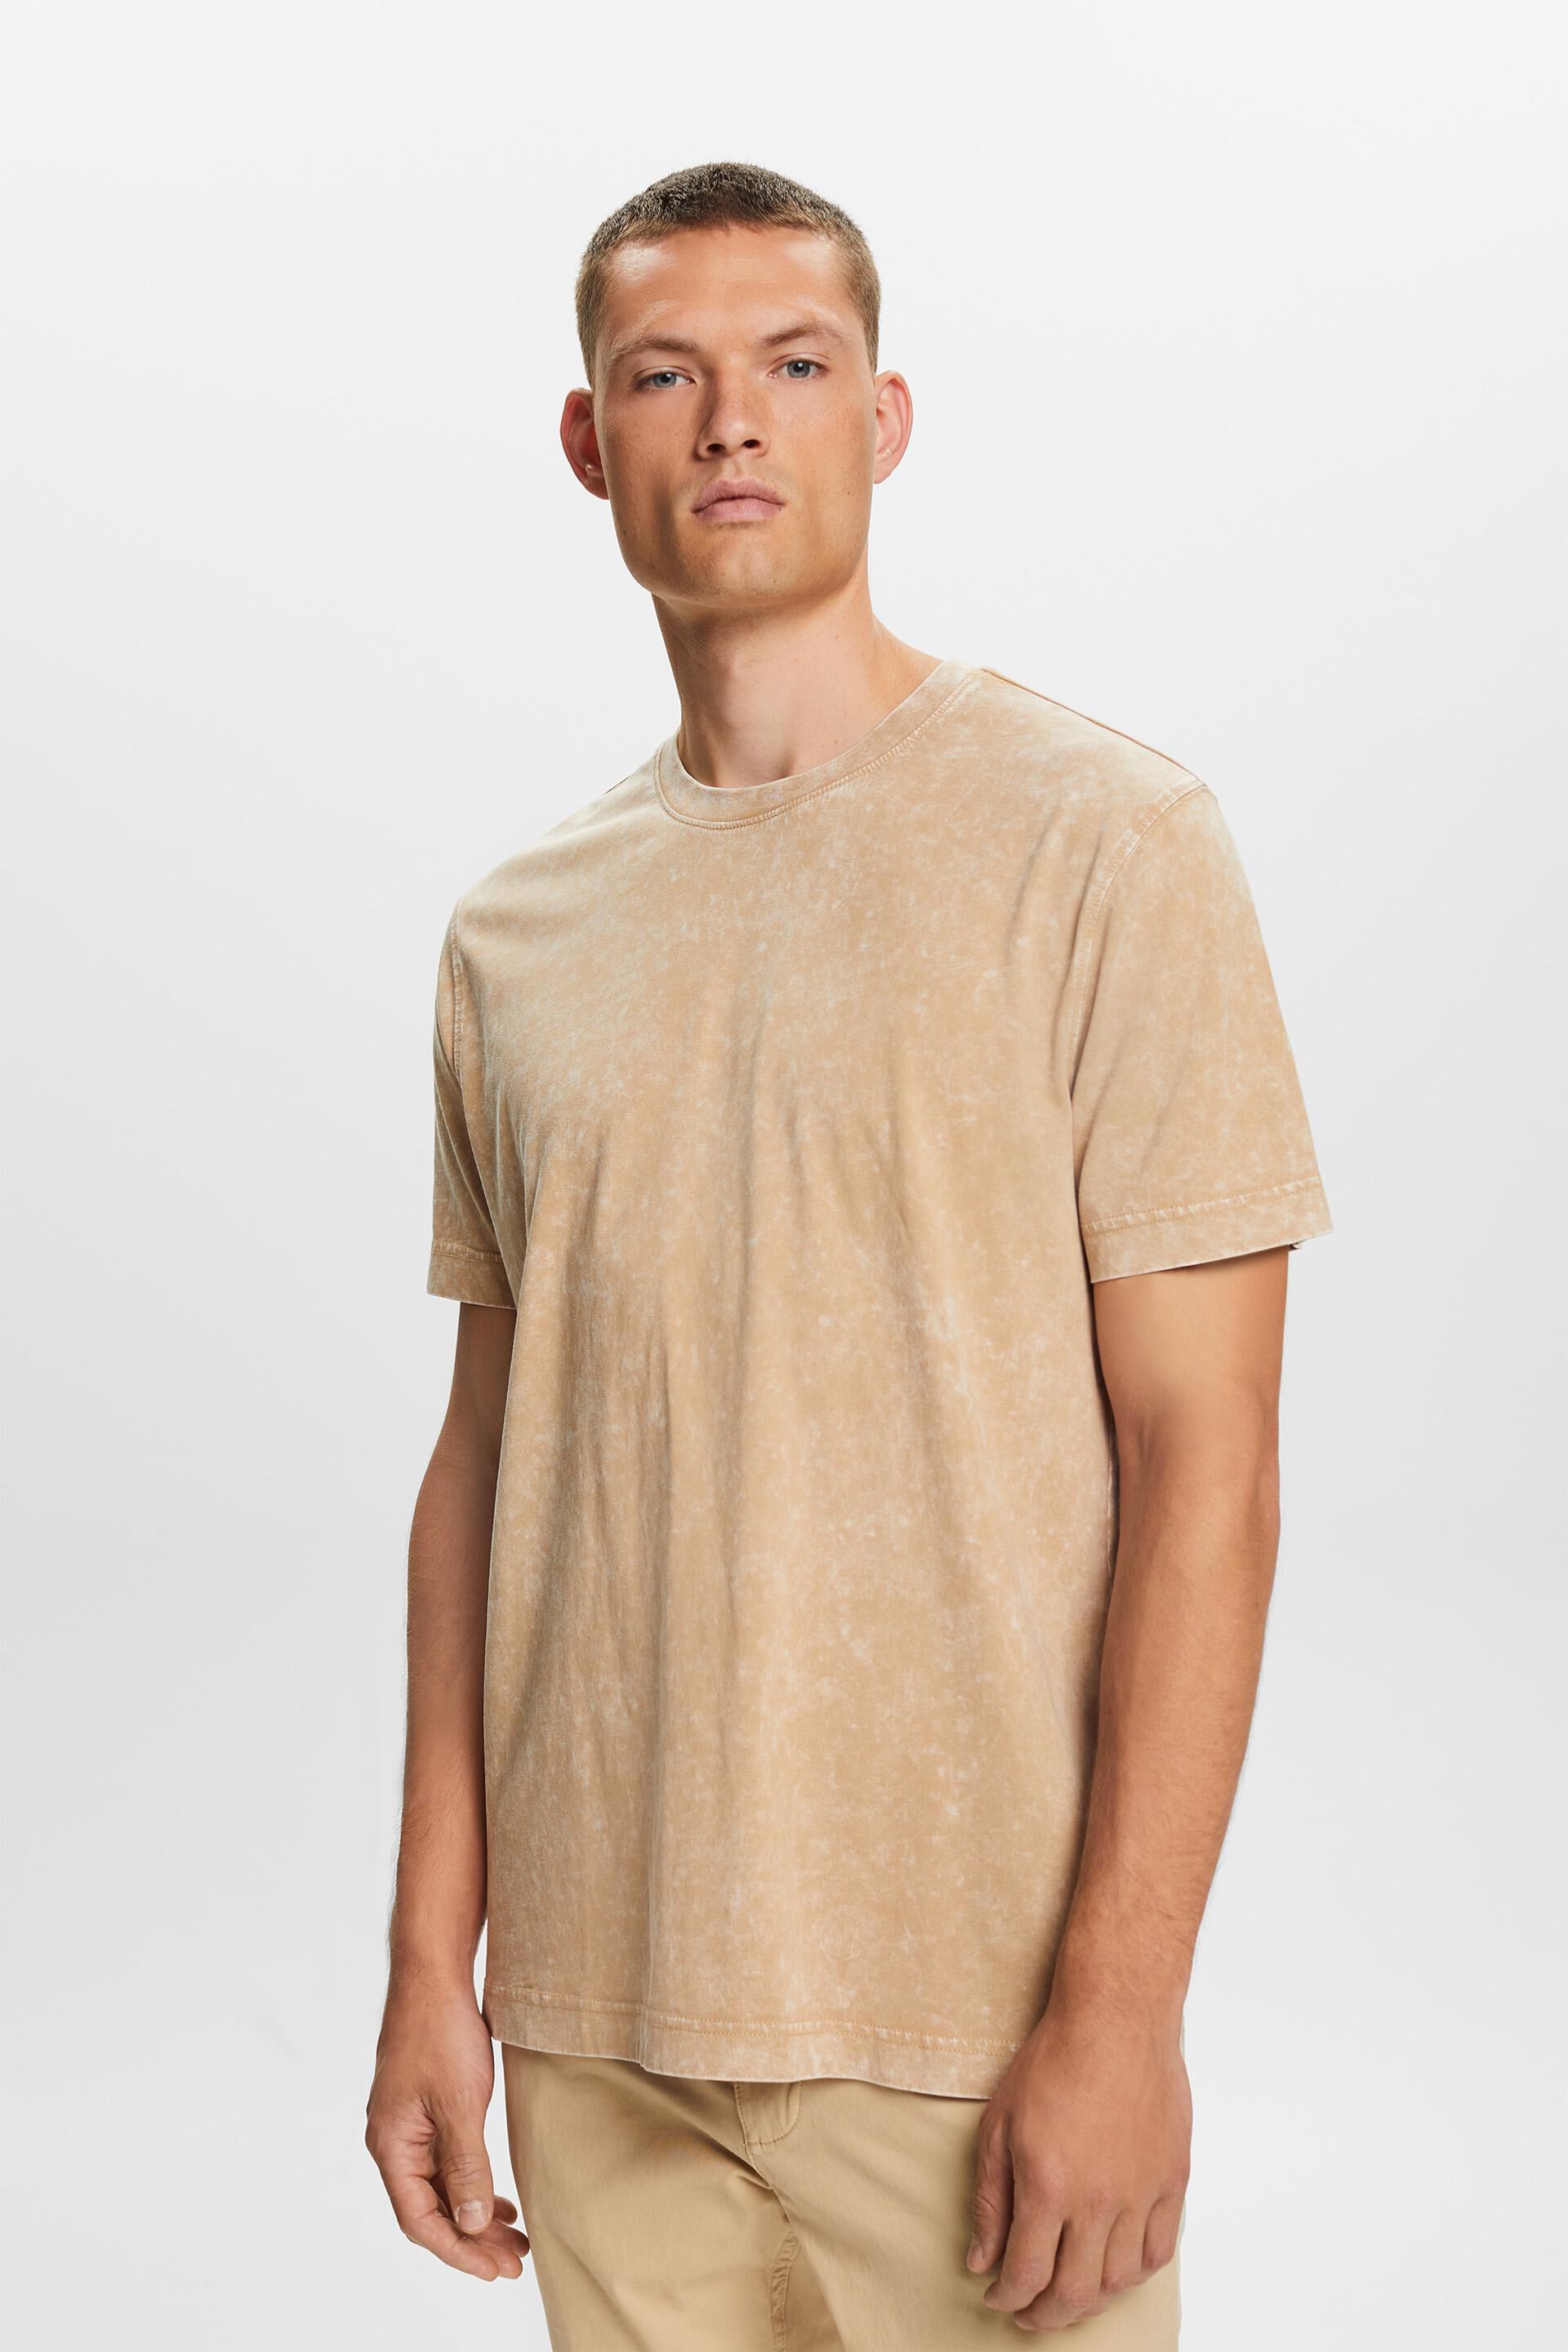 Esprit Stone T-shirt, cotton washed 100%